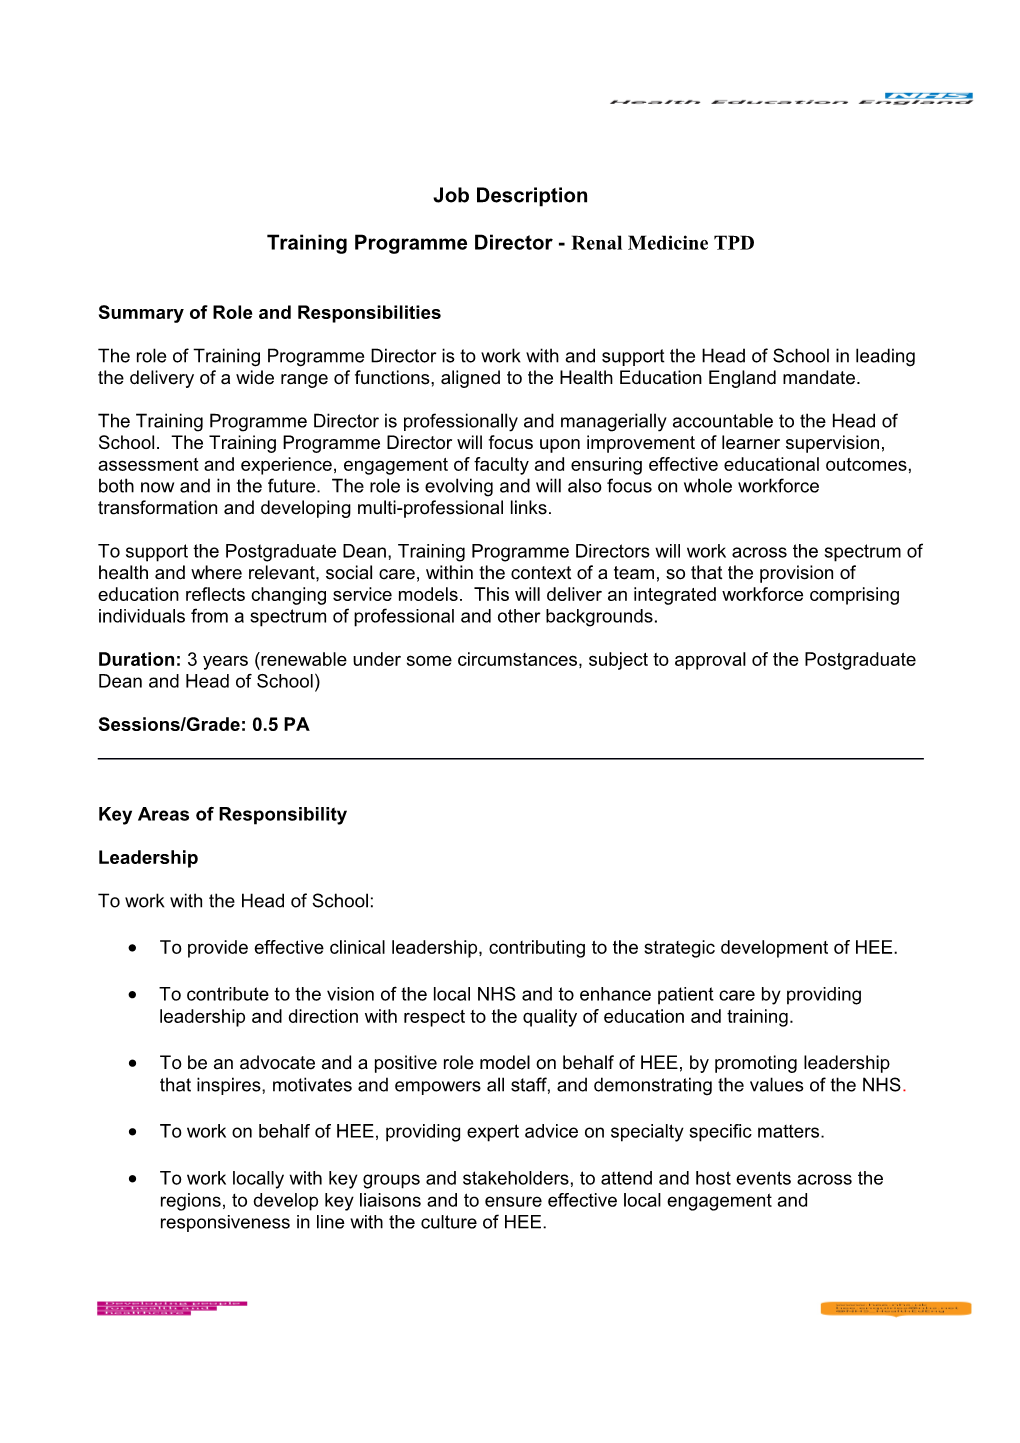 Training Programme Director - Renal Medicine TPD